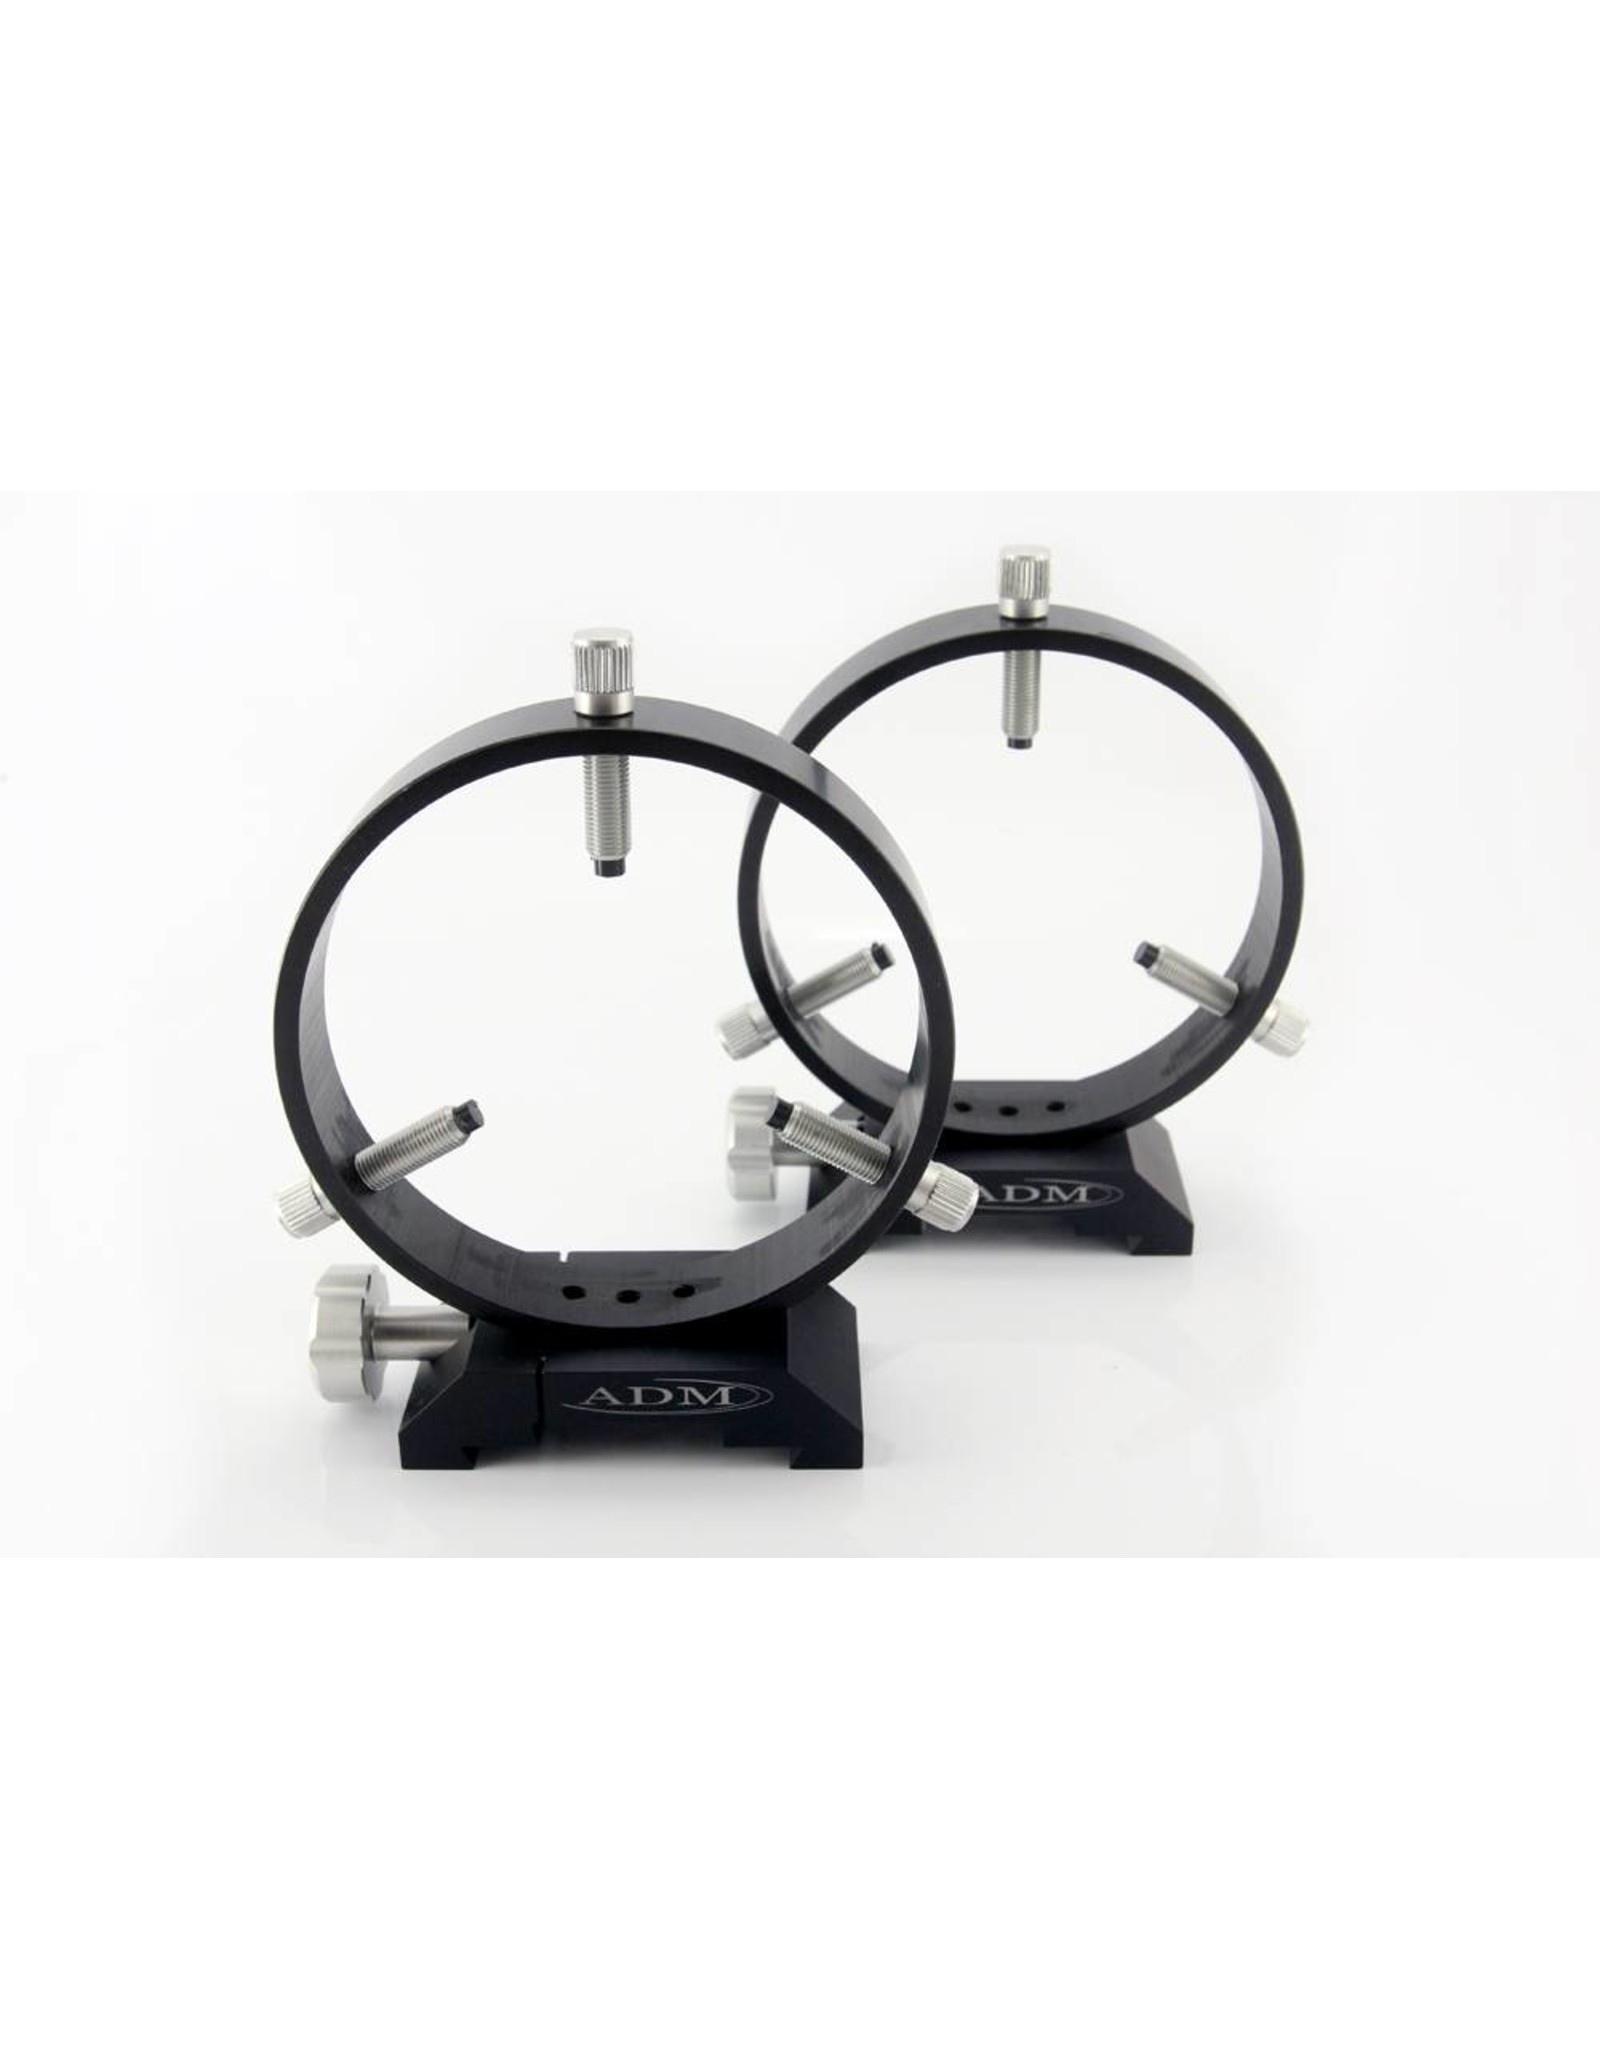 ADM ADM DV Series Dovetail Ring Set (SPECIFY SIZE)